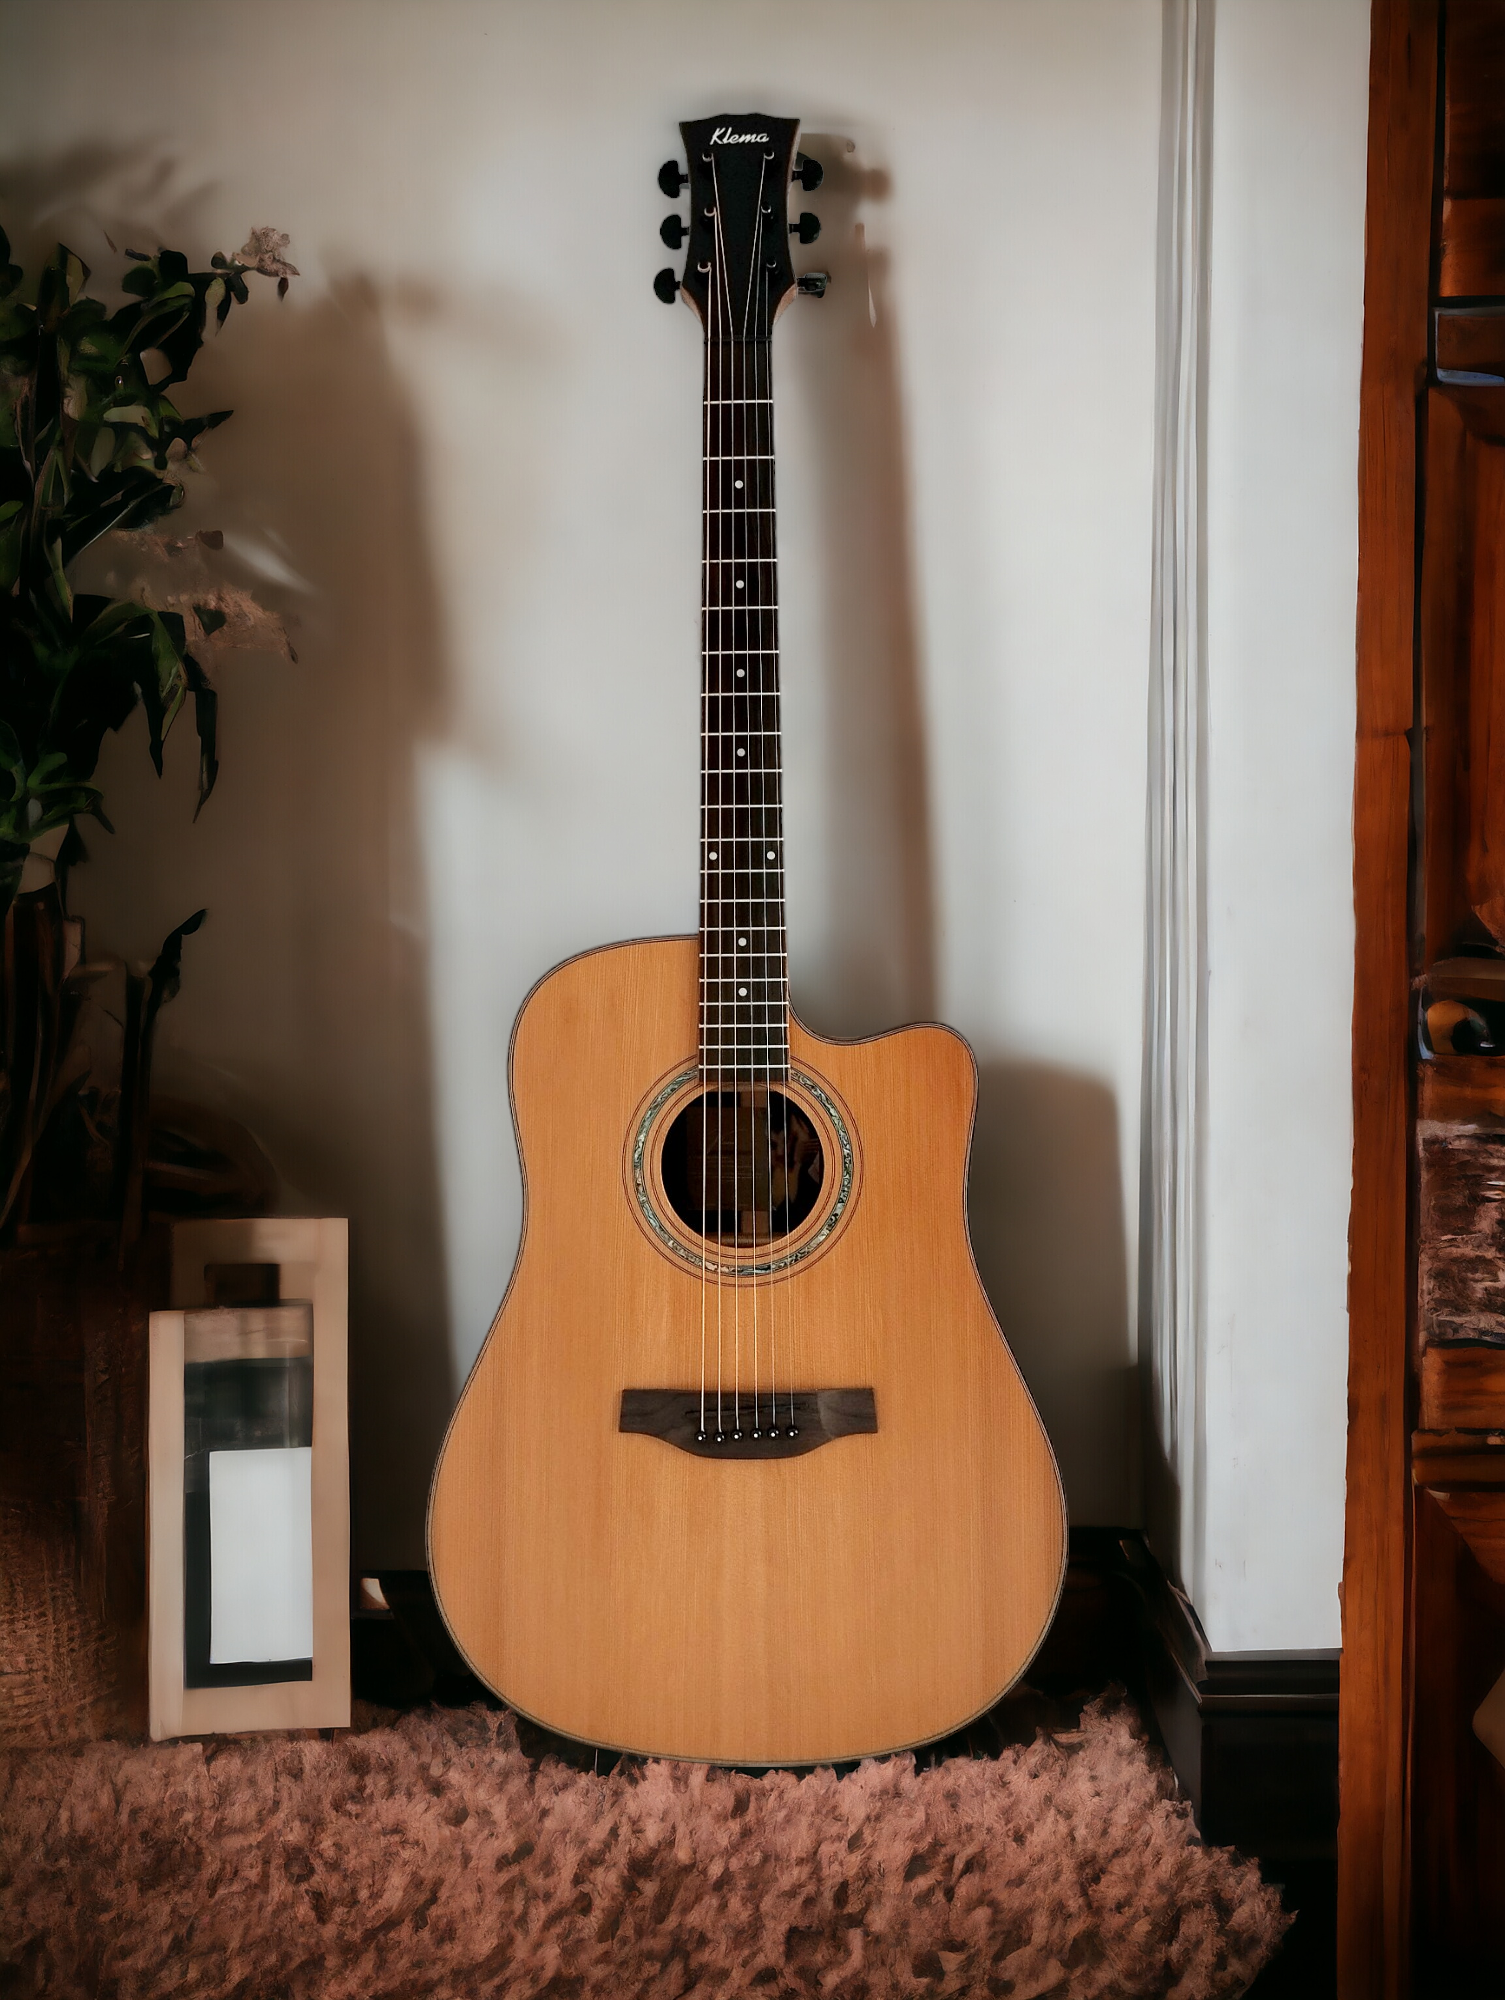 Klema Solid Canadian Cedar Top Indian Rosewood Body Fishman Pickup/Tuner Acoustic Guitar - Natural K300DCCE